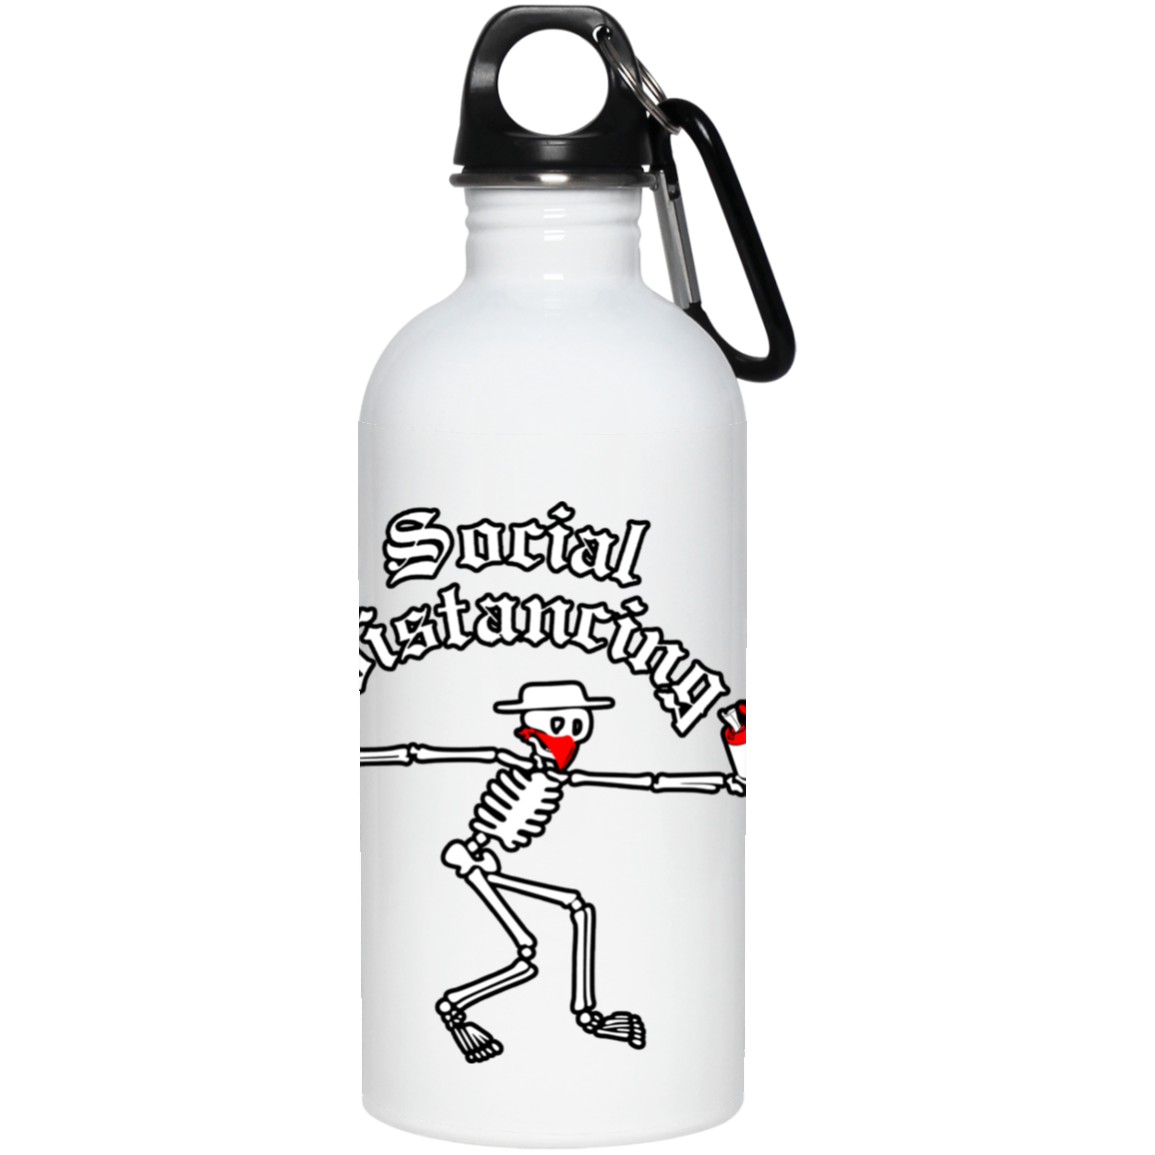 ArtichokeUSA Custom Design. Social Distancing. Social Distortion Parody. 20 oz. Stainless Steel Water Bottle